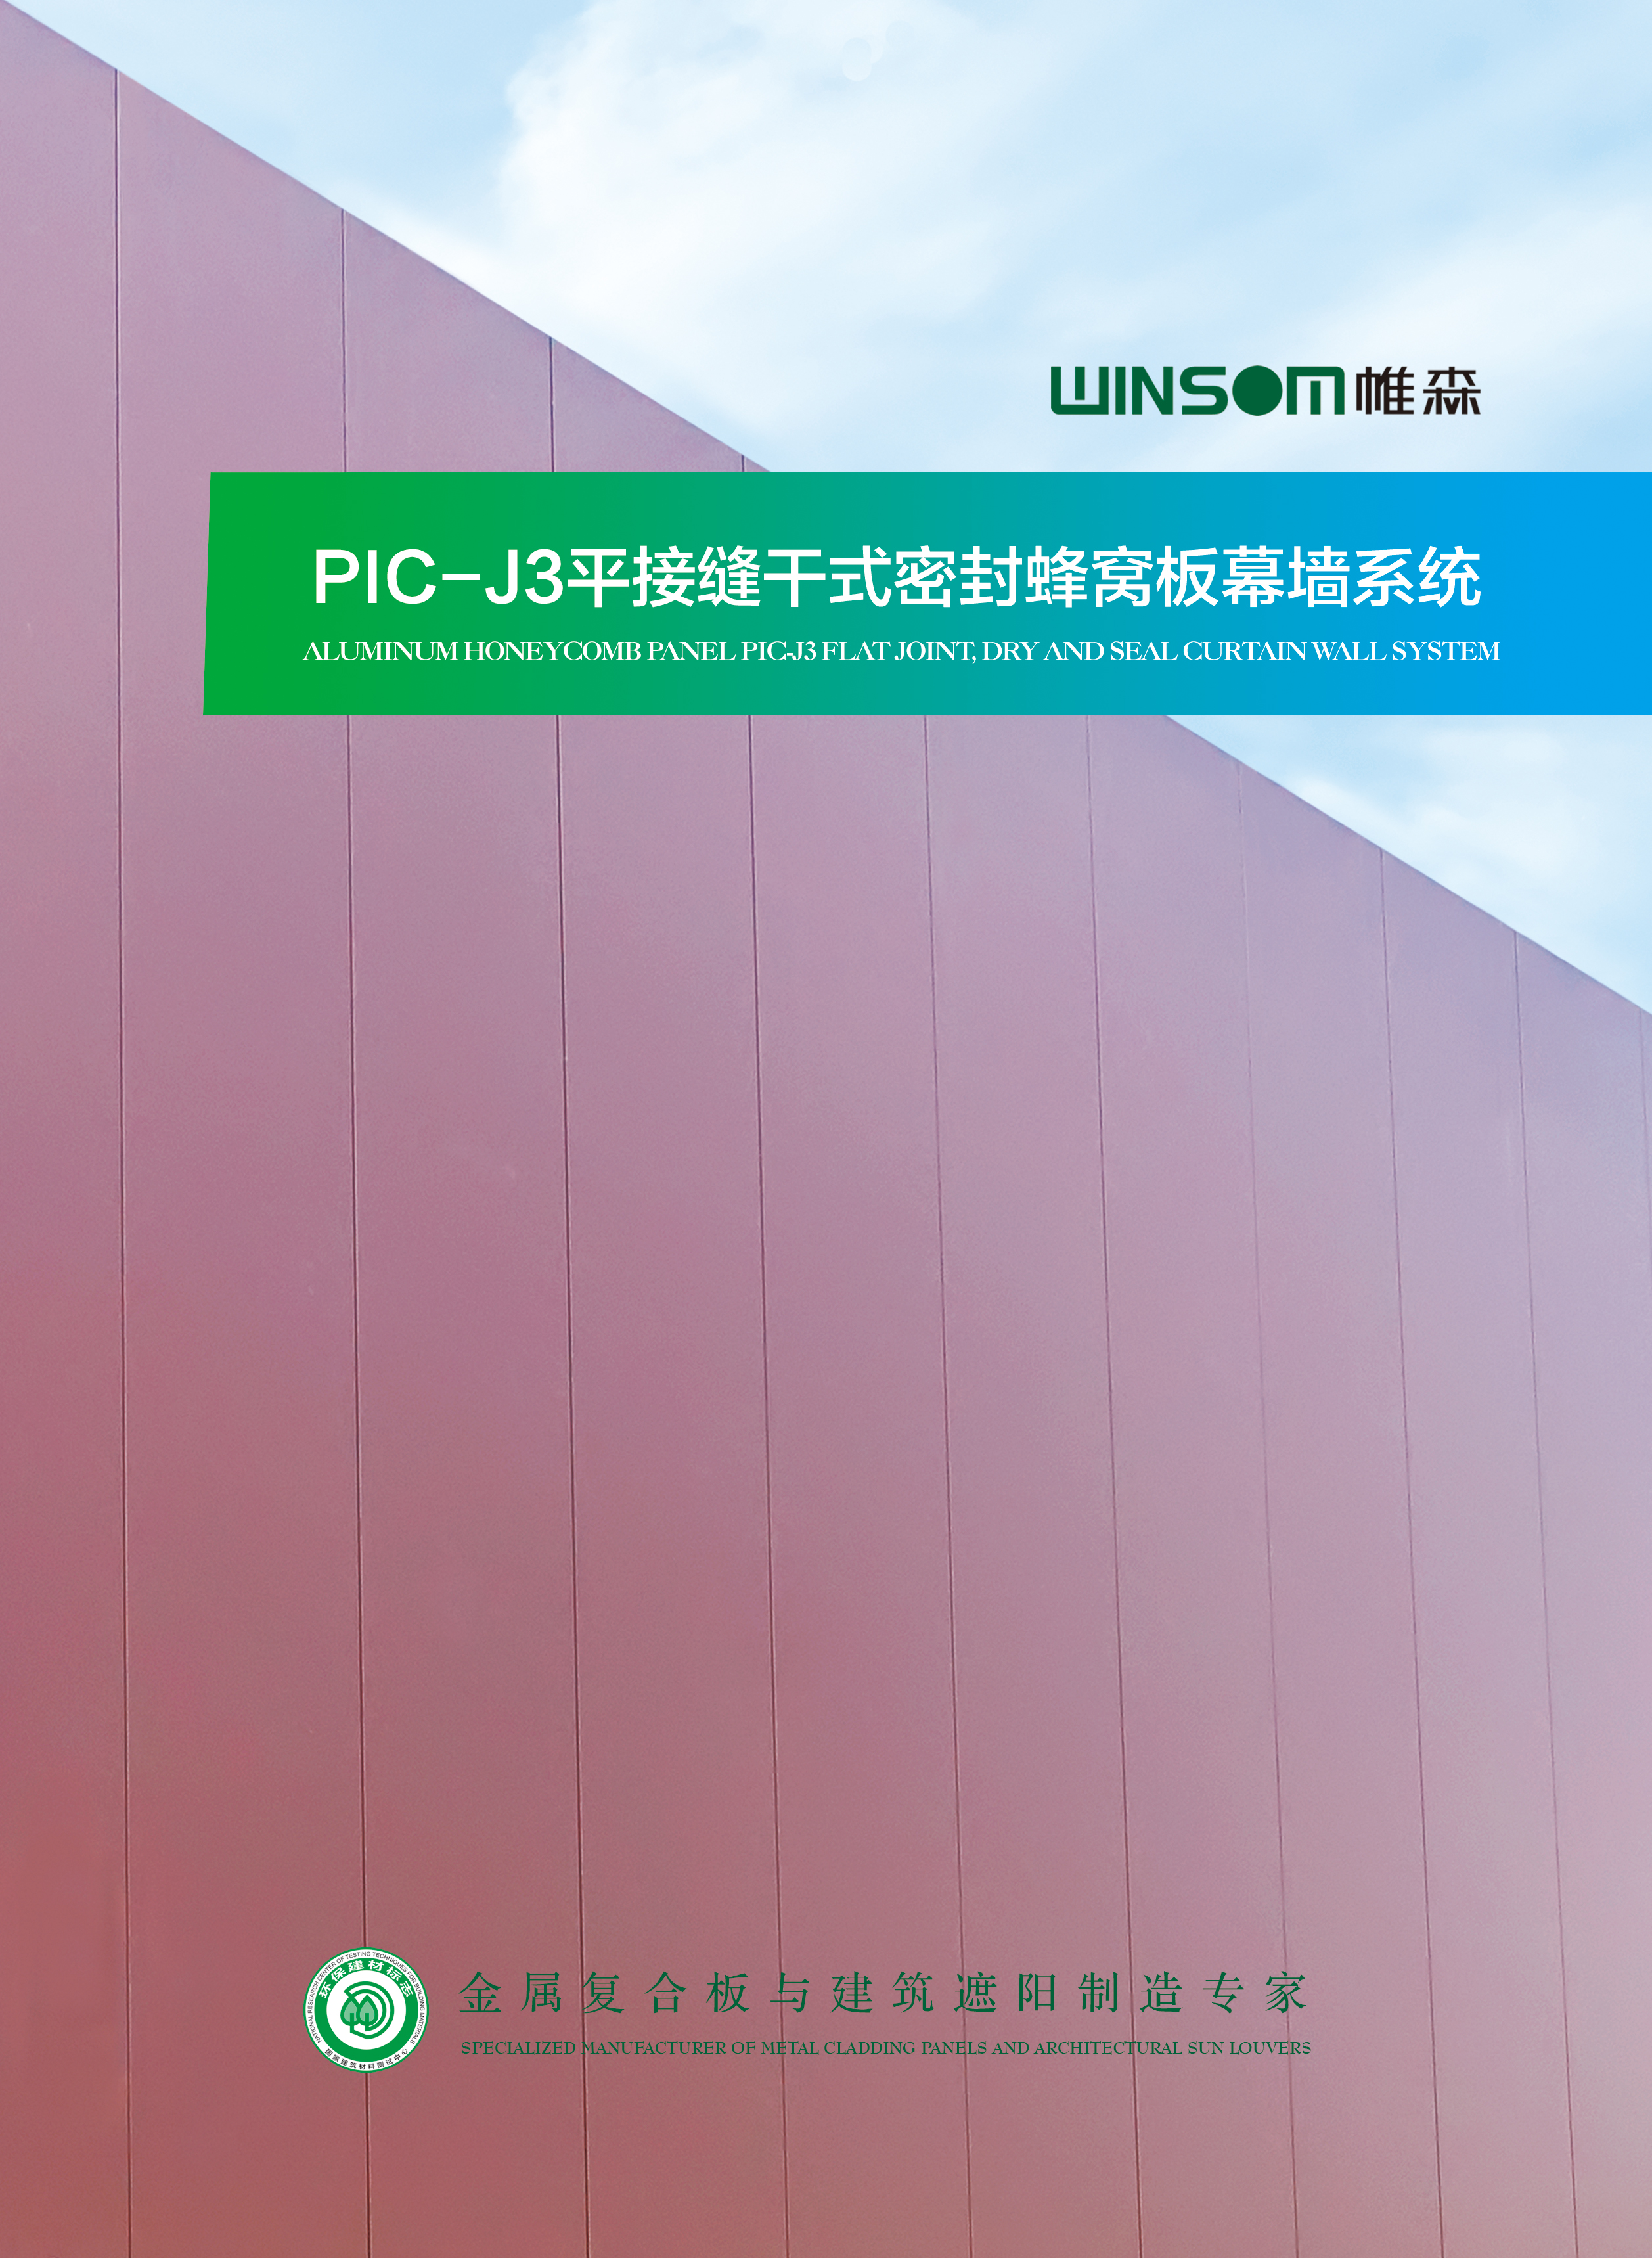 PIC-J3平接縫干式密封蜂窩板幕墻系統手冊